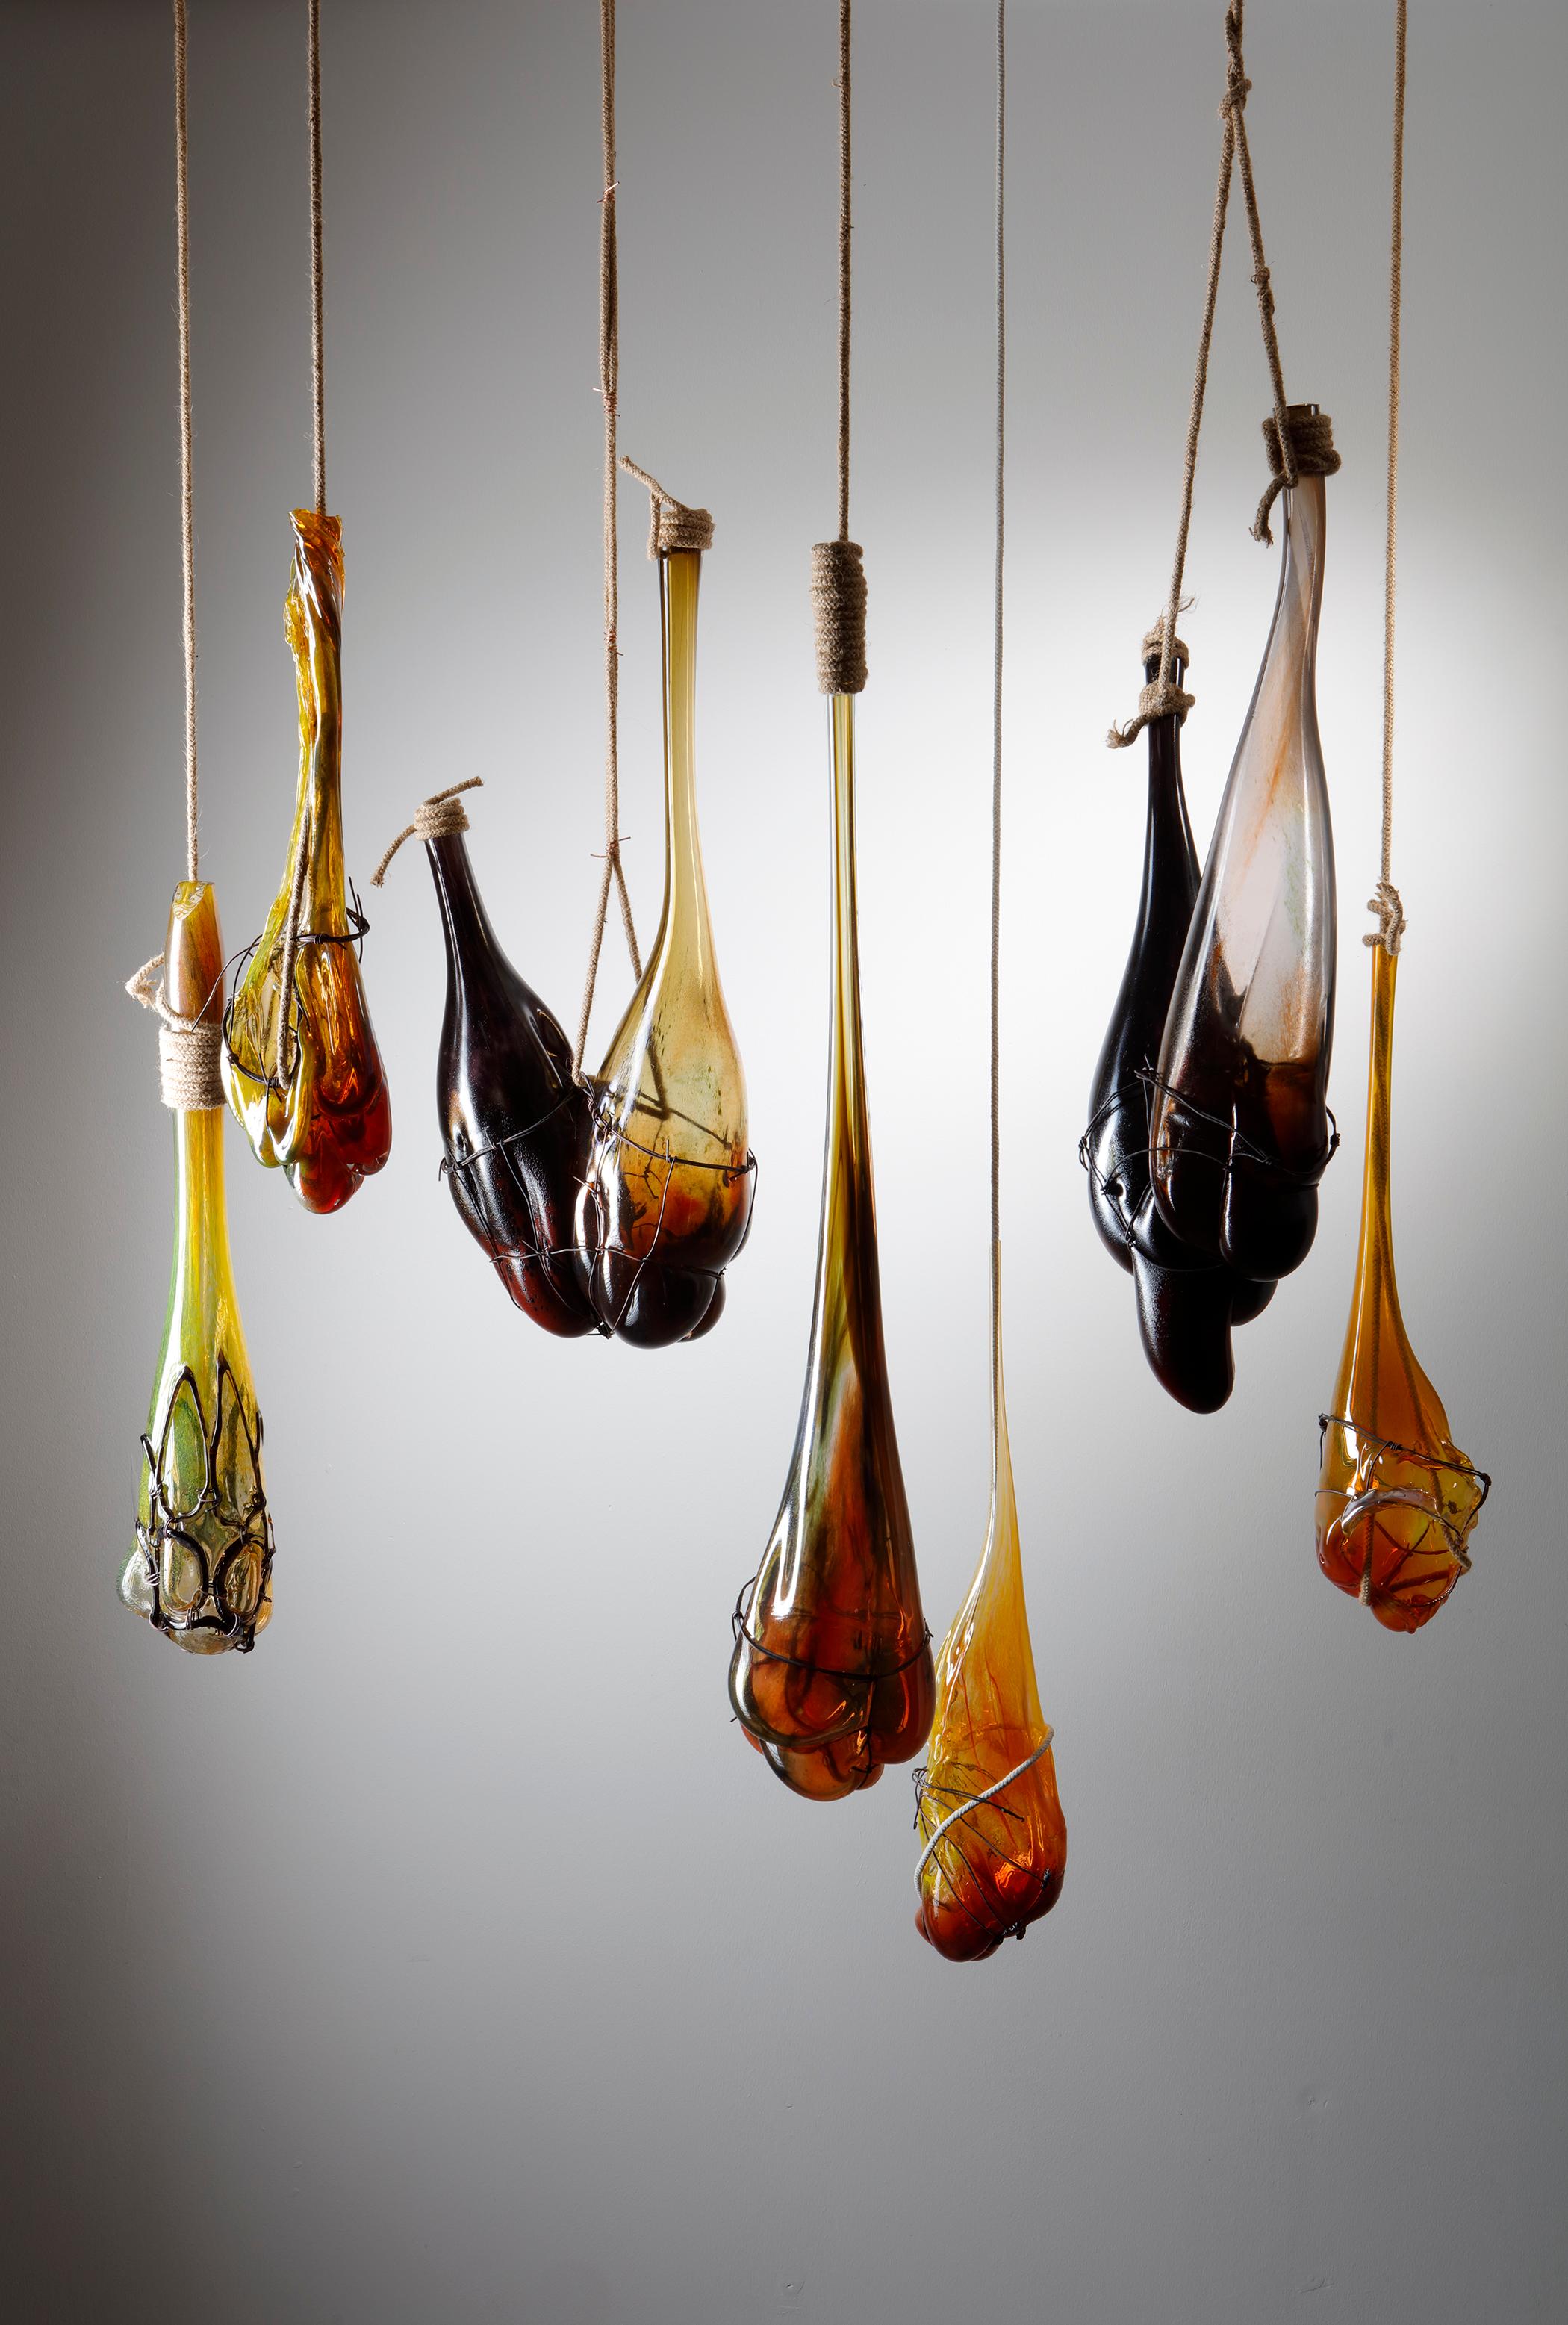 British Strange Fruit Installation, a Unique Glass Hanging Sculpture by Chris Day